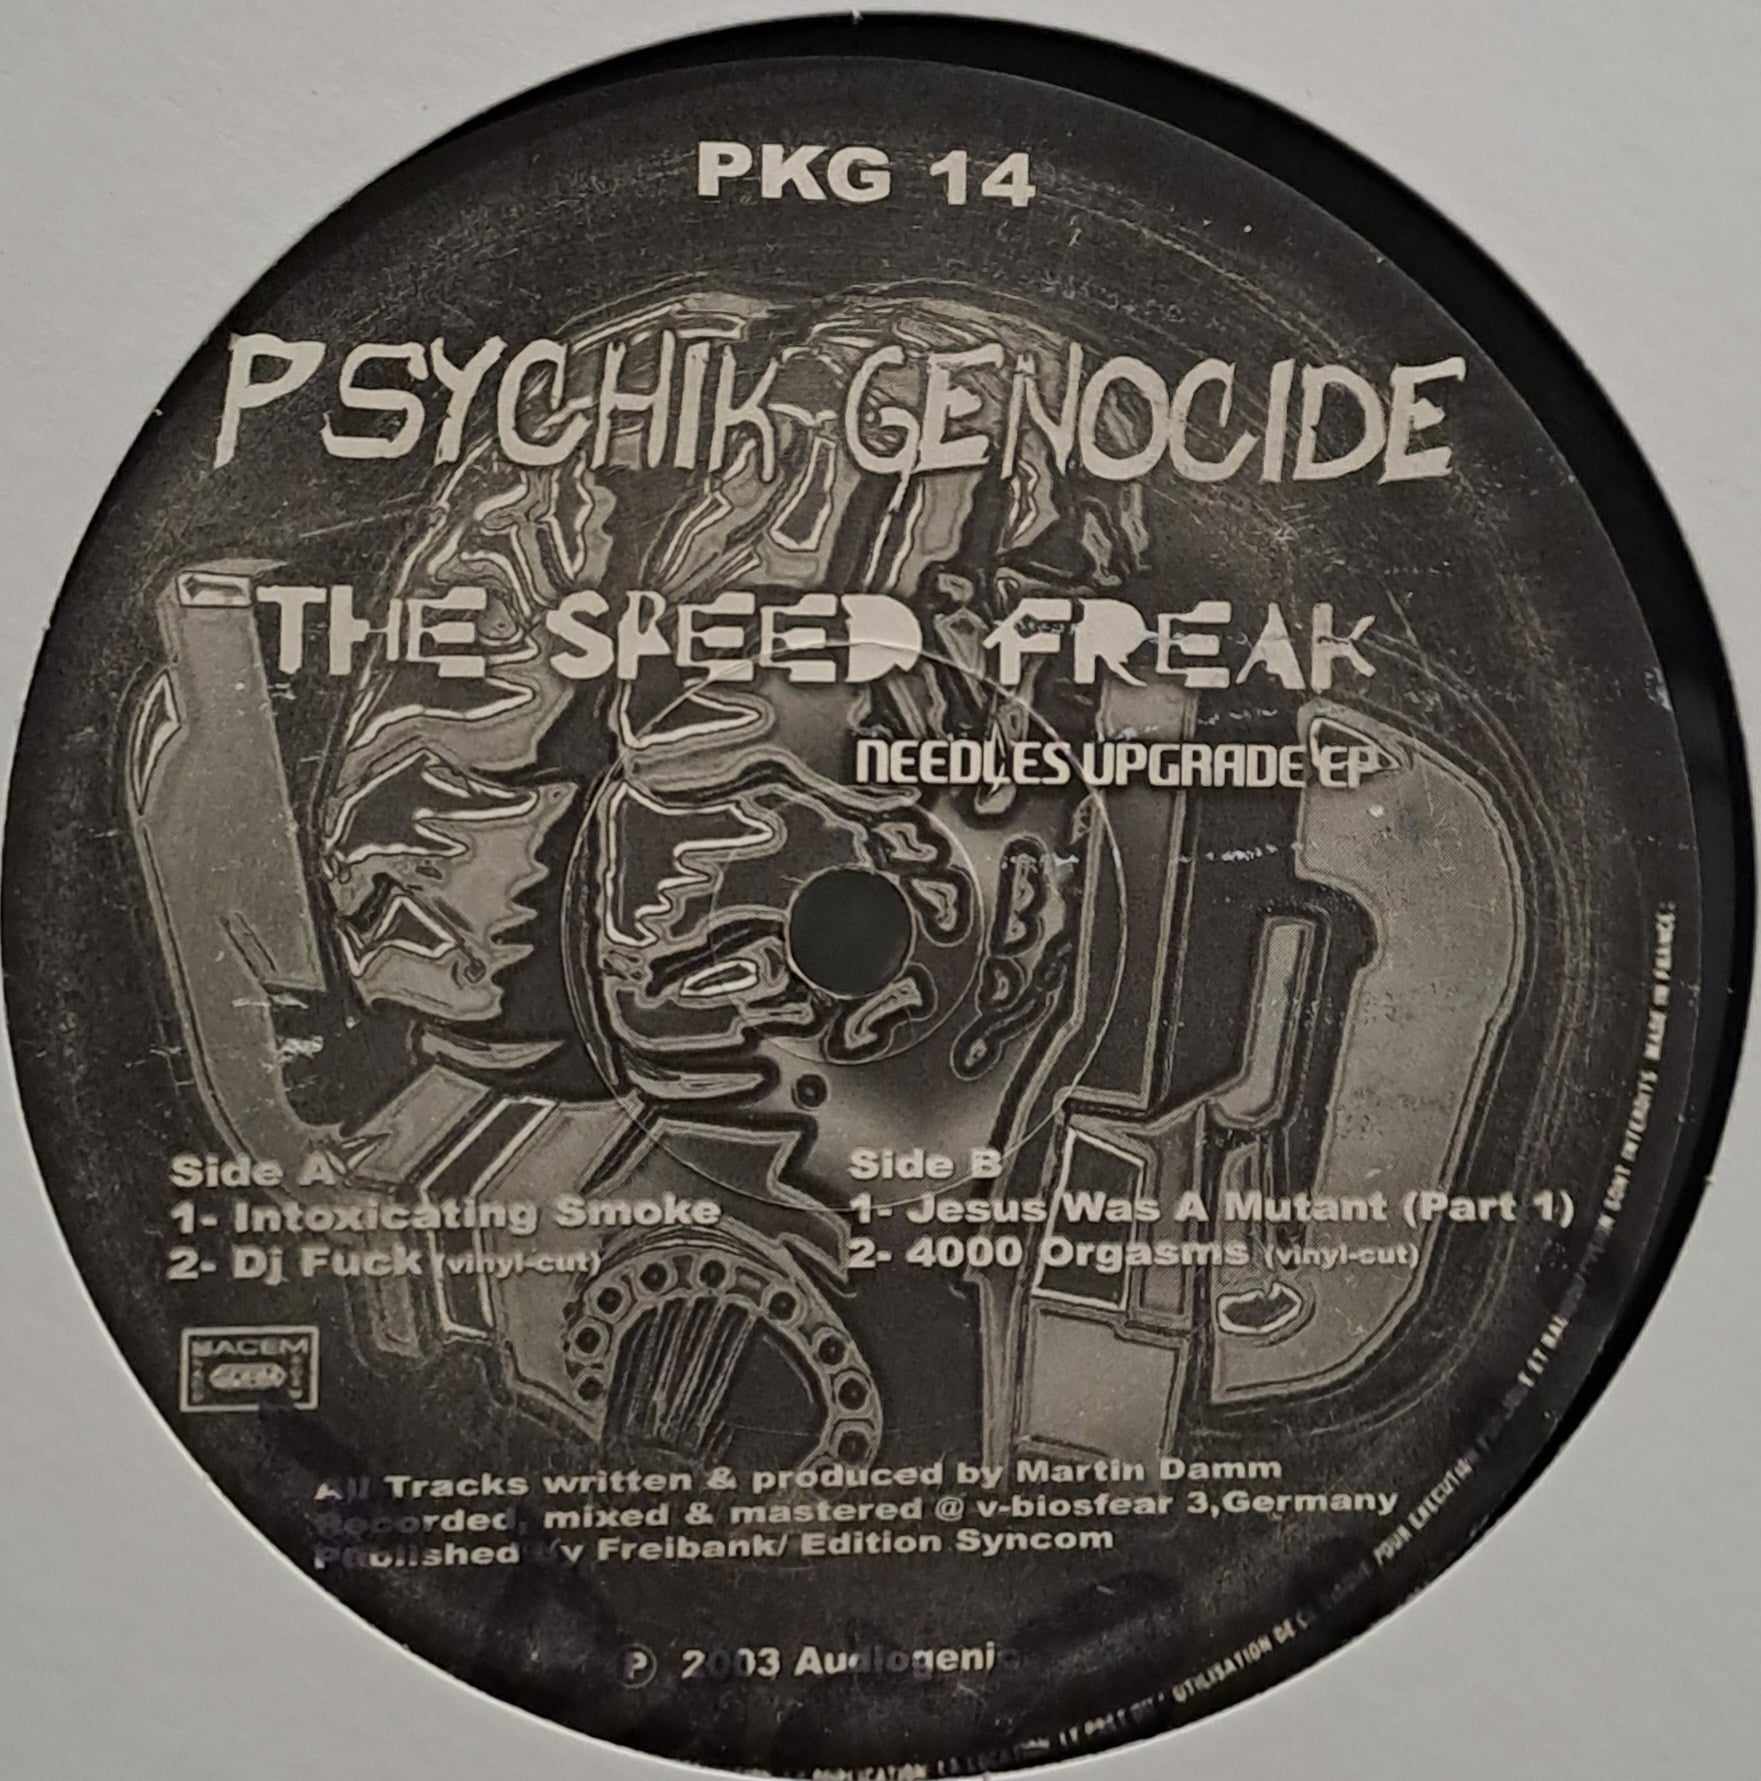 Psychik Genocide 14 - vinyle hardcore